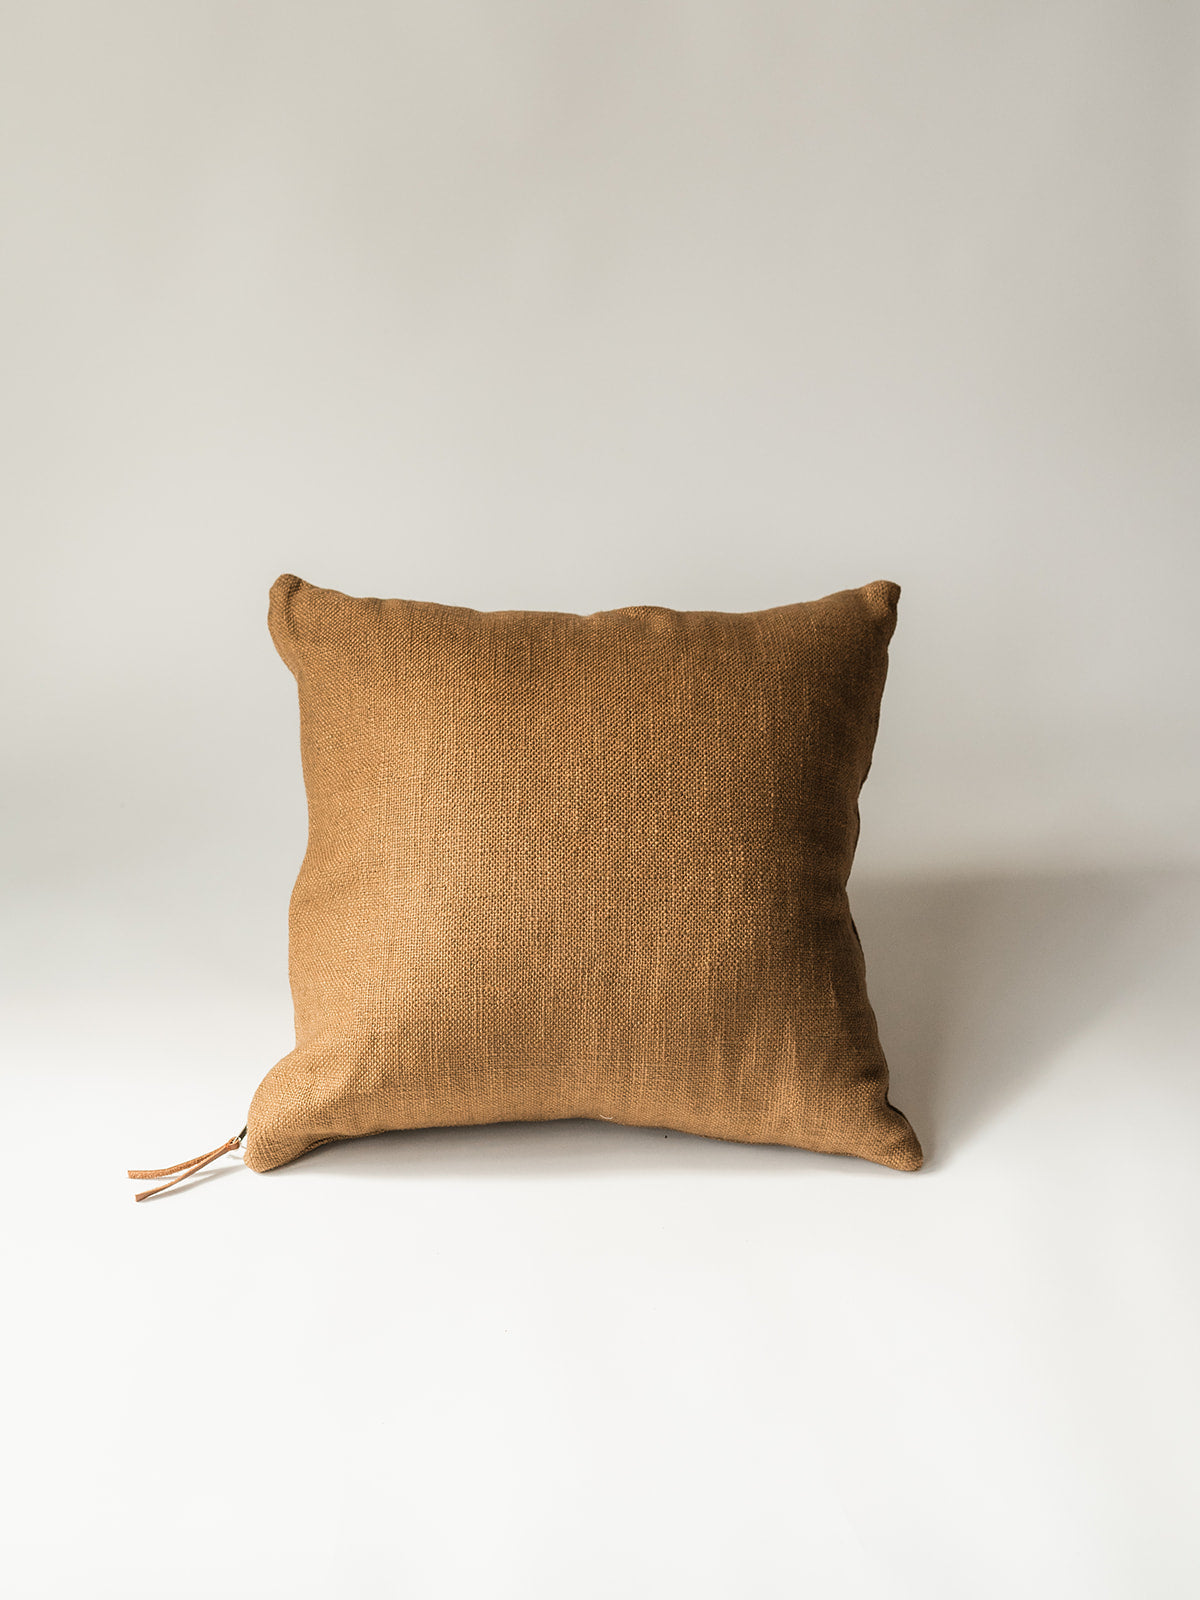 Luxe Linen Square Throw Pillow